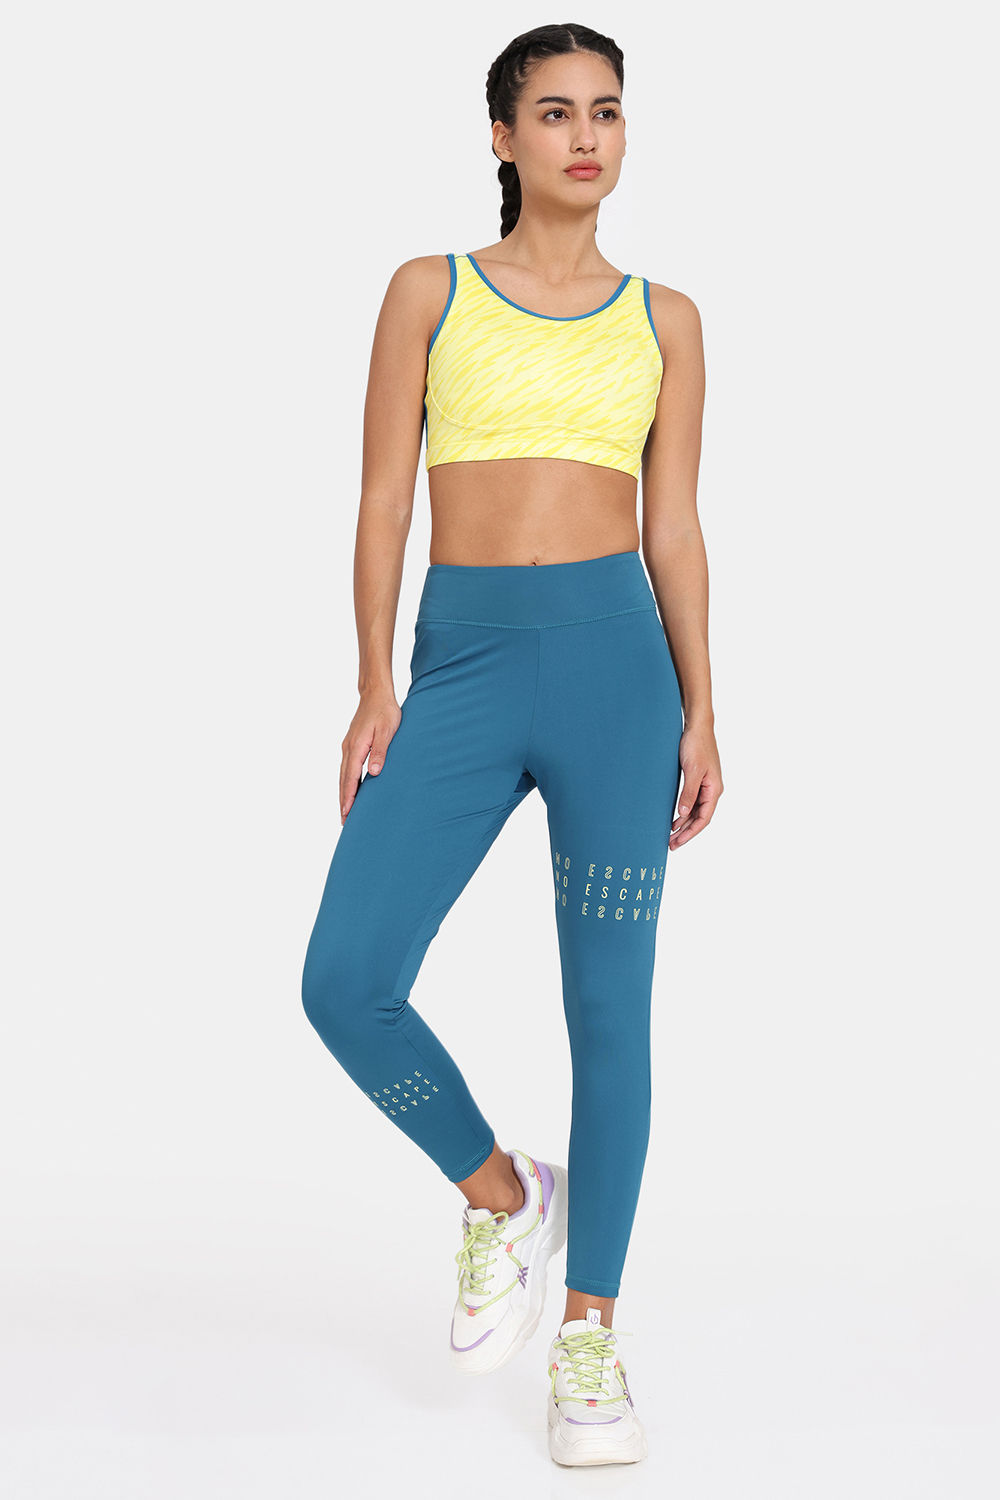 https://cdn.zivame.com/ik-seo/media/catalog/product/1/_/1_69_27/zelocity-quick-dry-sports-bra-with-mid-rise-leggings-yellowtail-blue.jpg